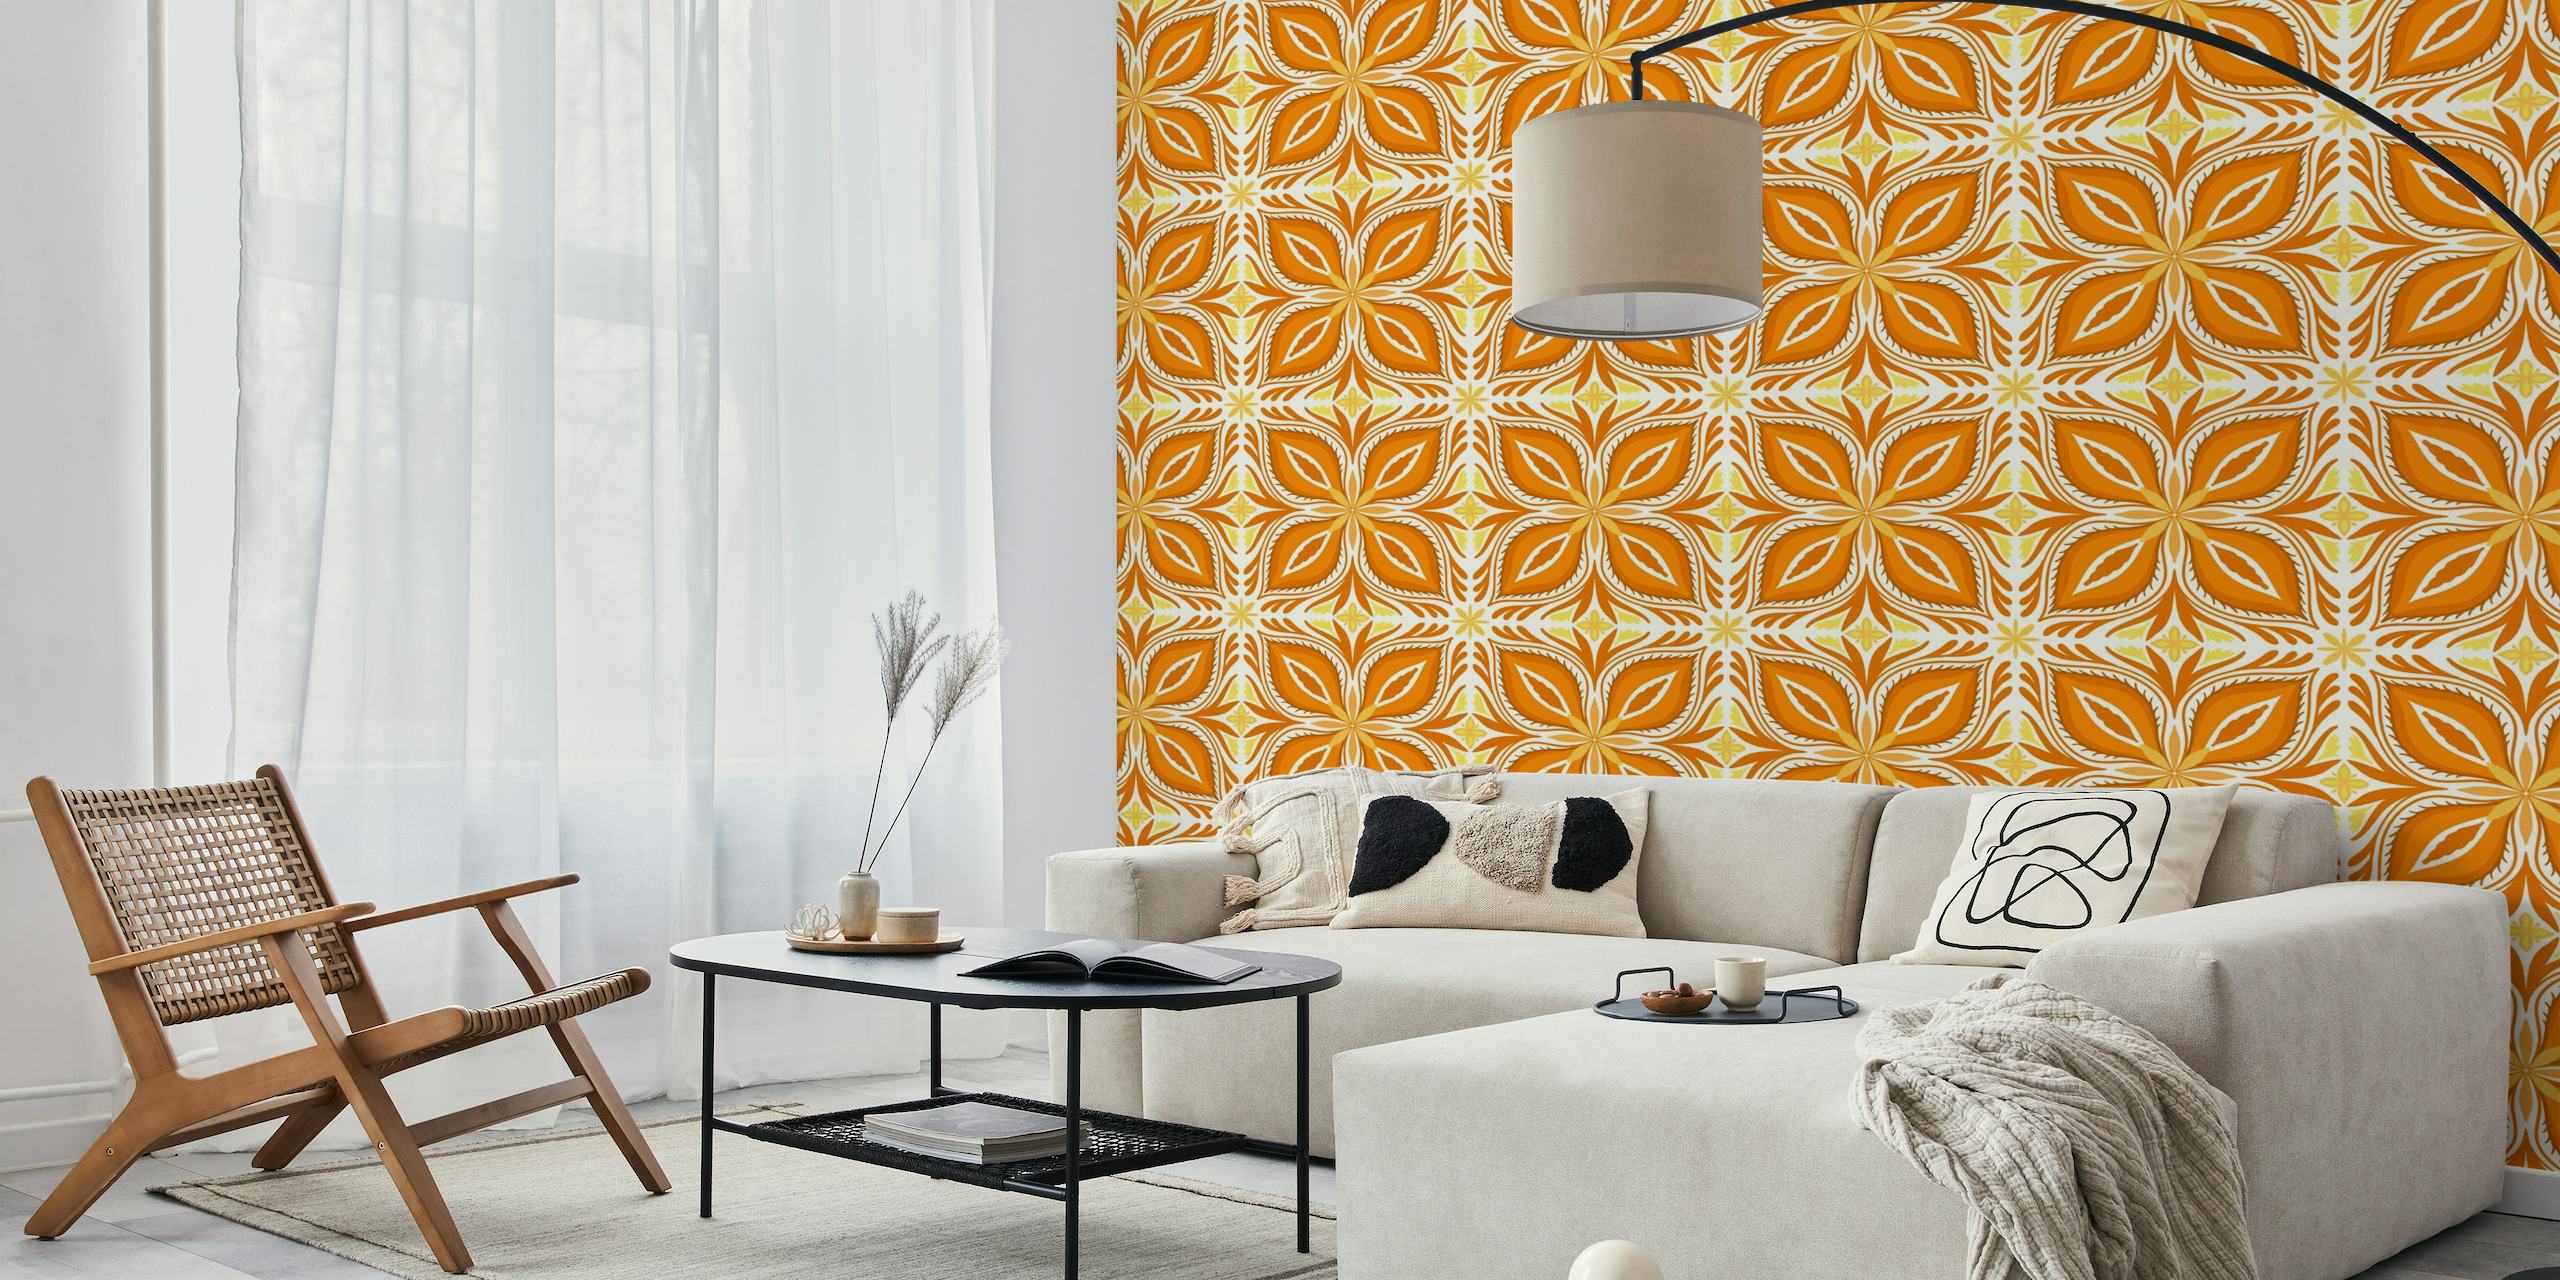 Ornate tiles, yellow and orange 7 papiers peint